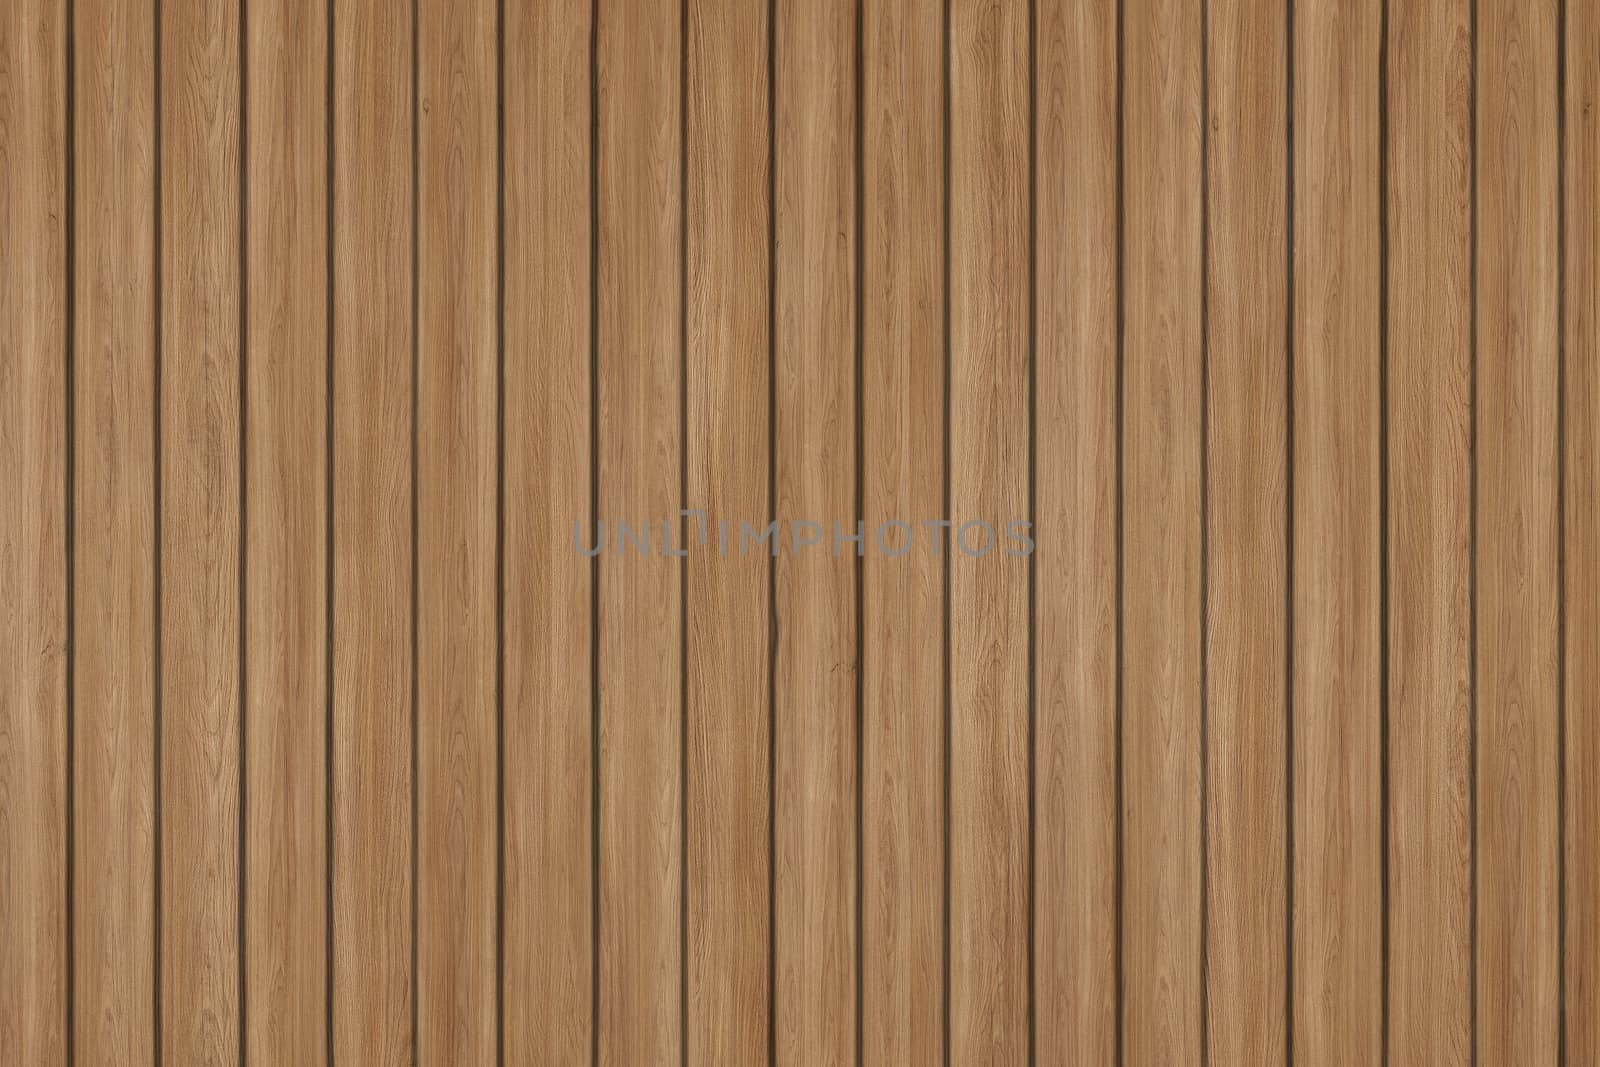 grunge wood pattern texture background, wooden planks.